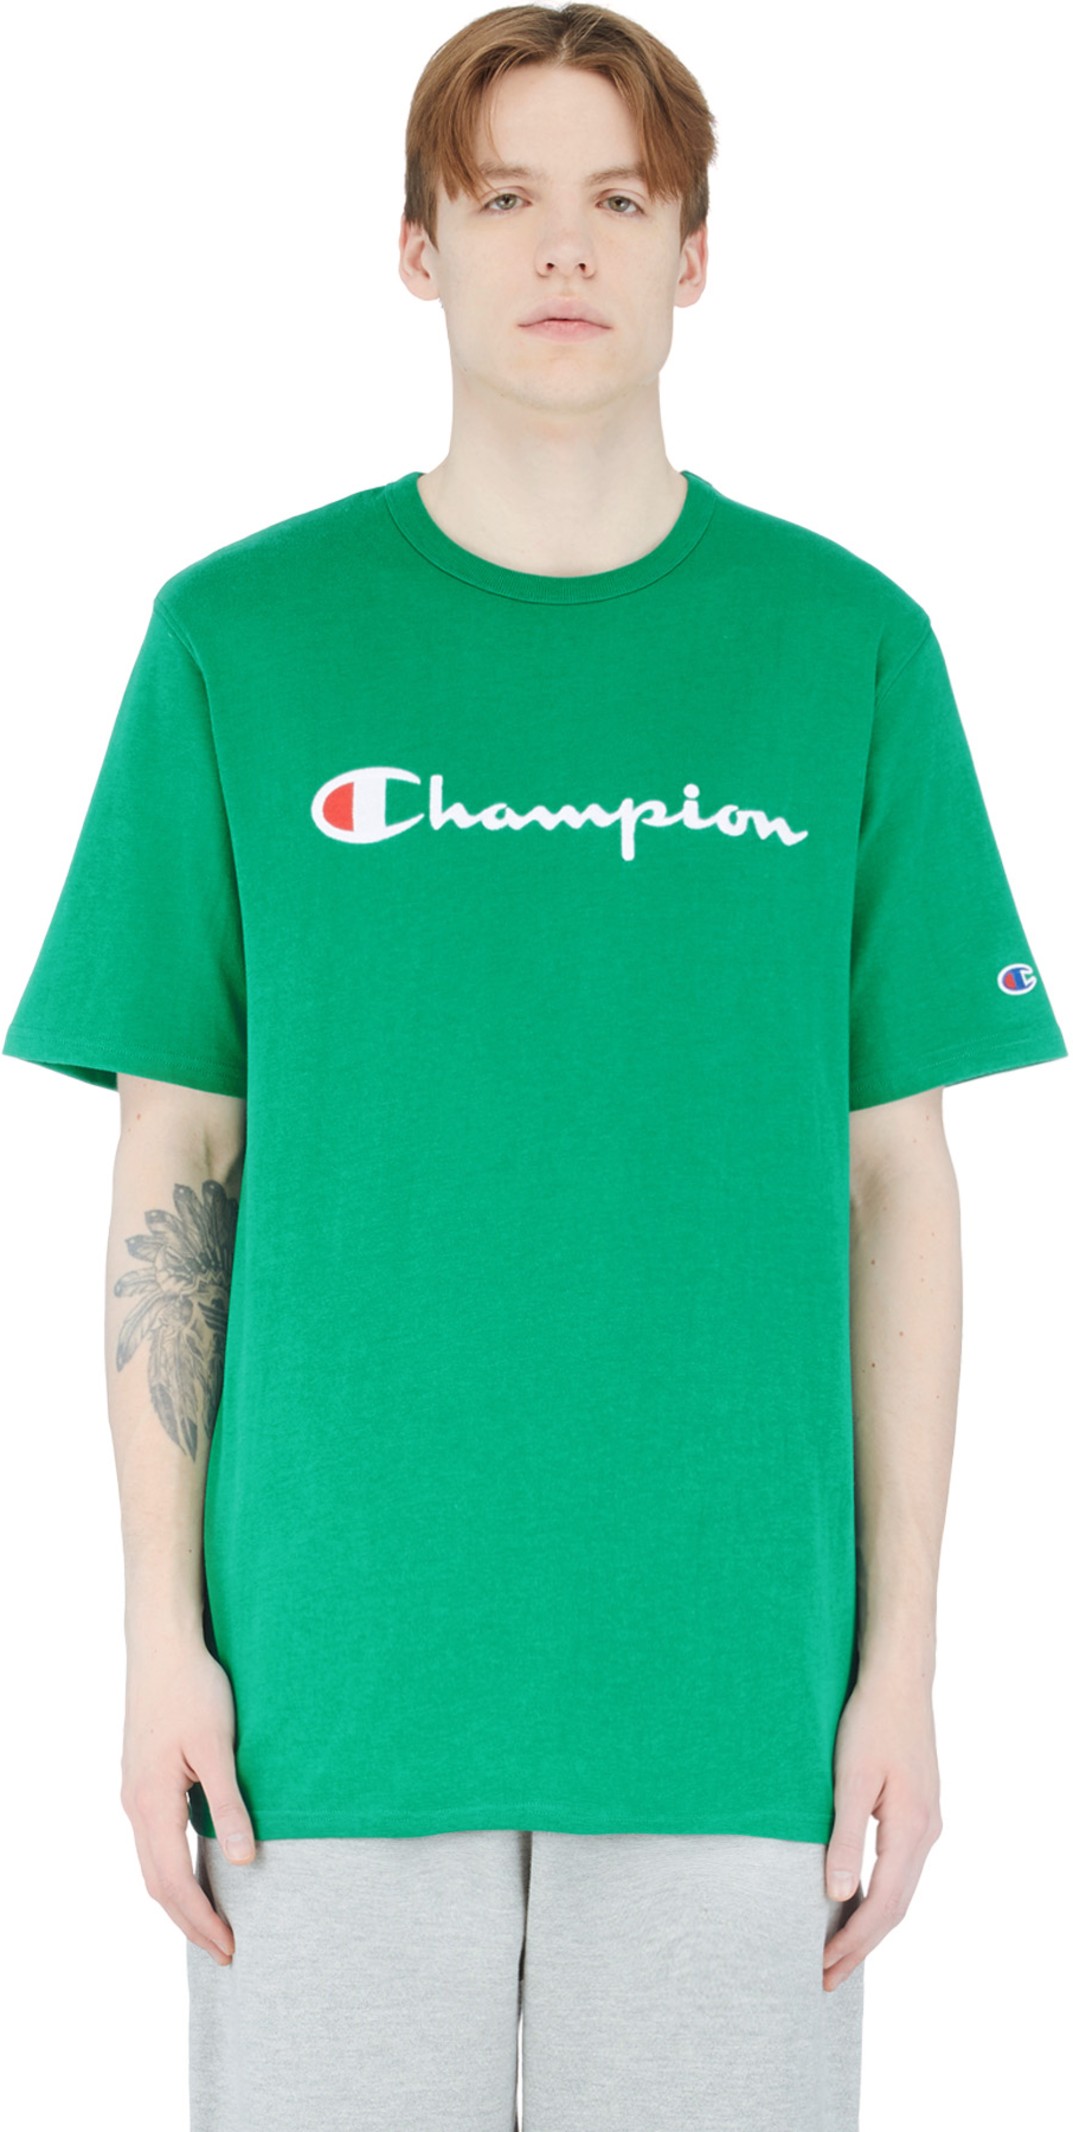 kelly green champion shirt